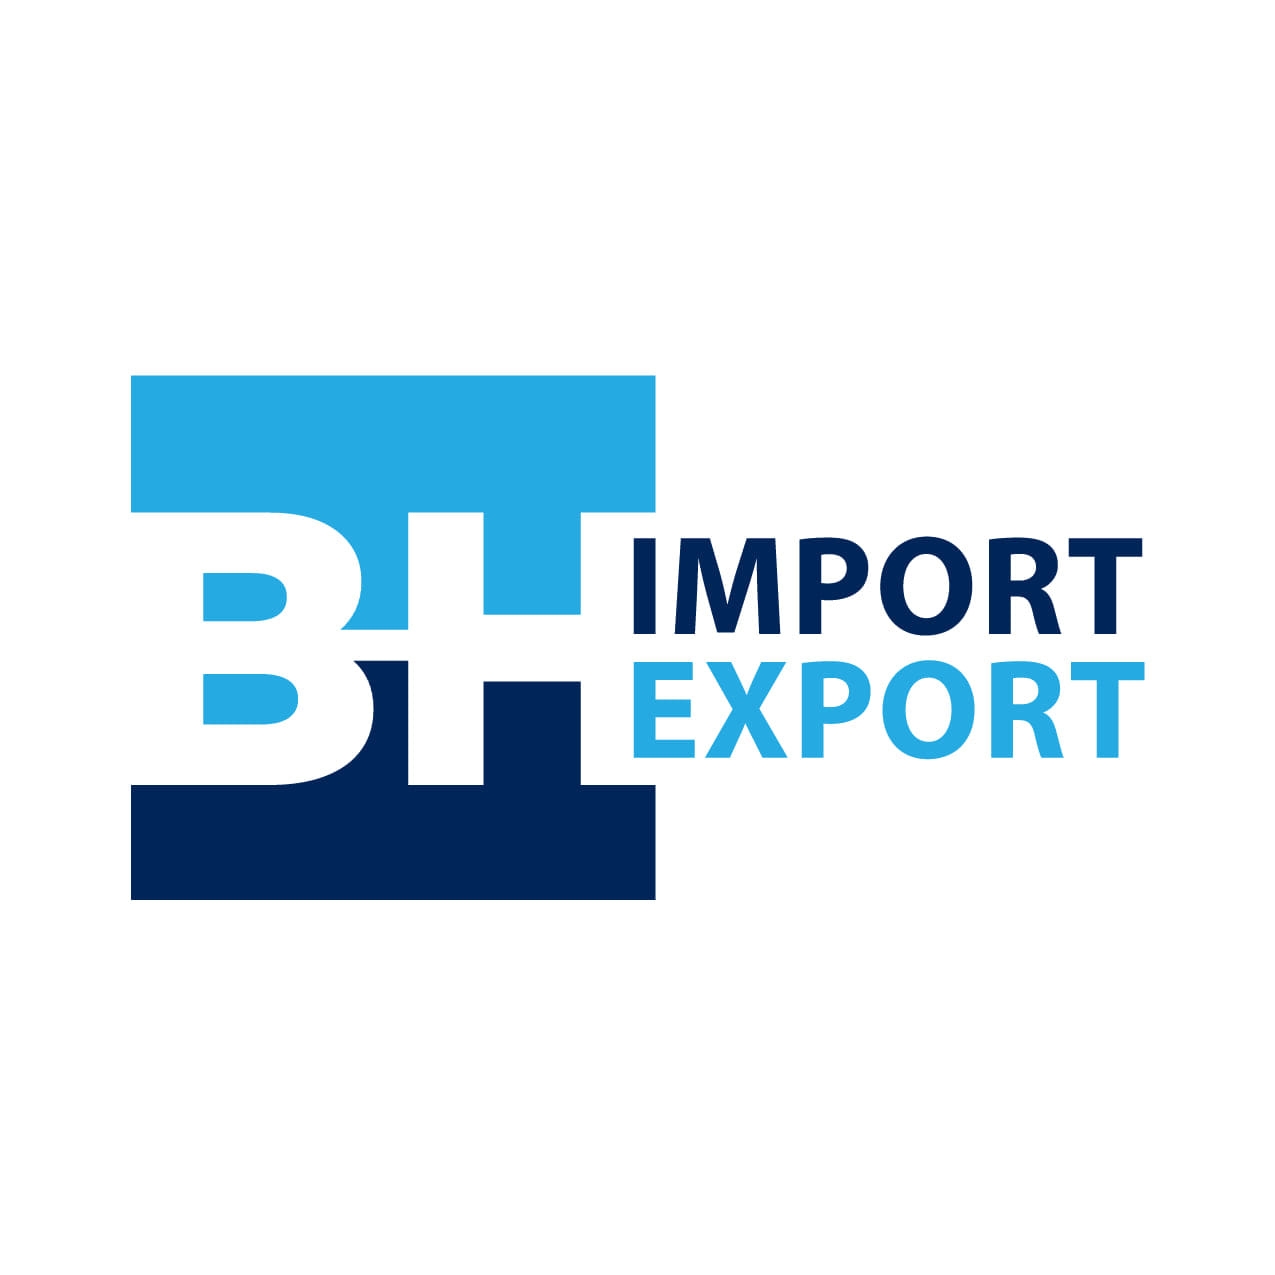 BH import